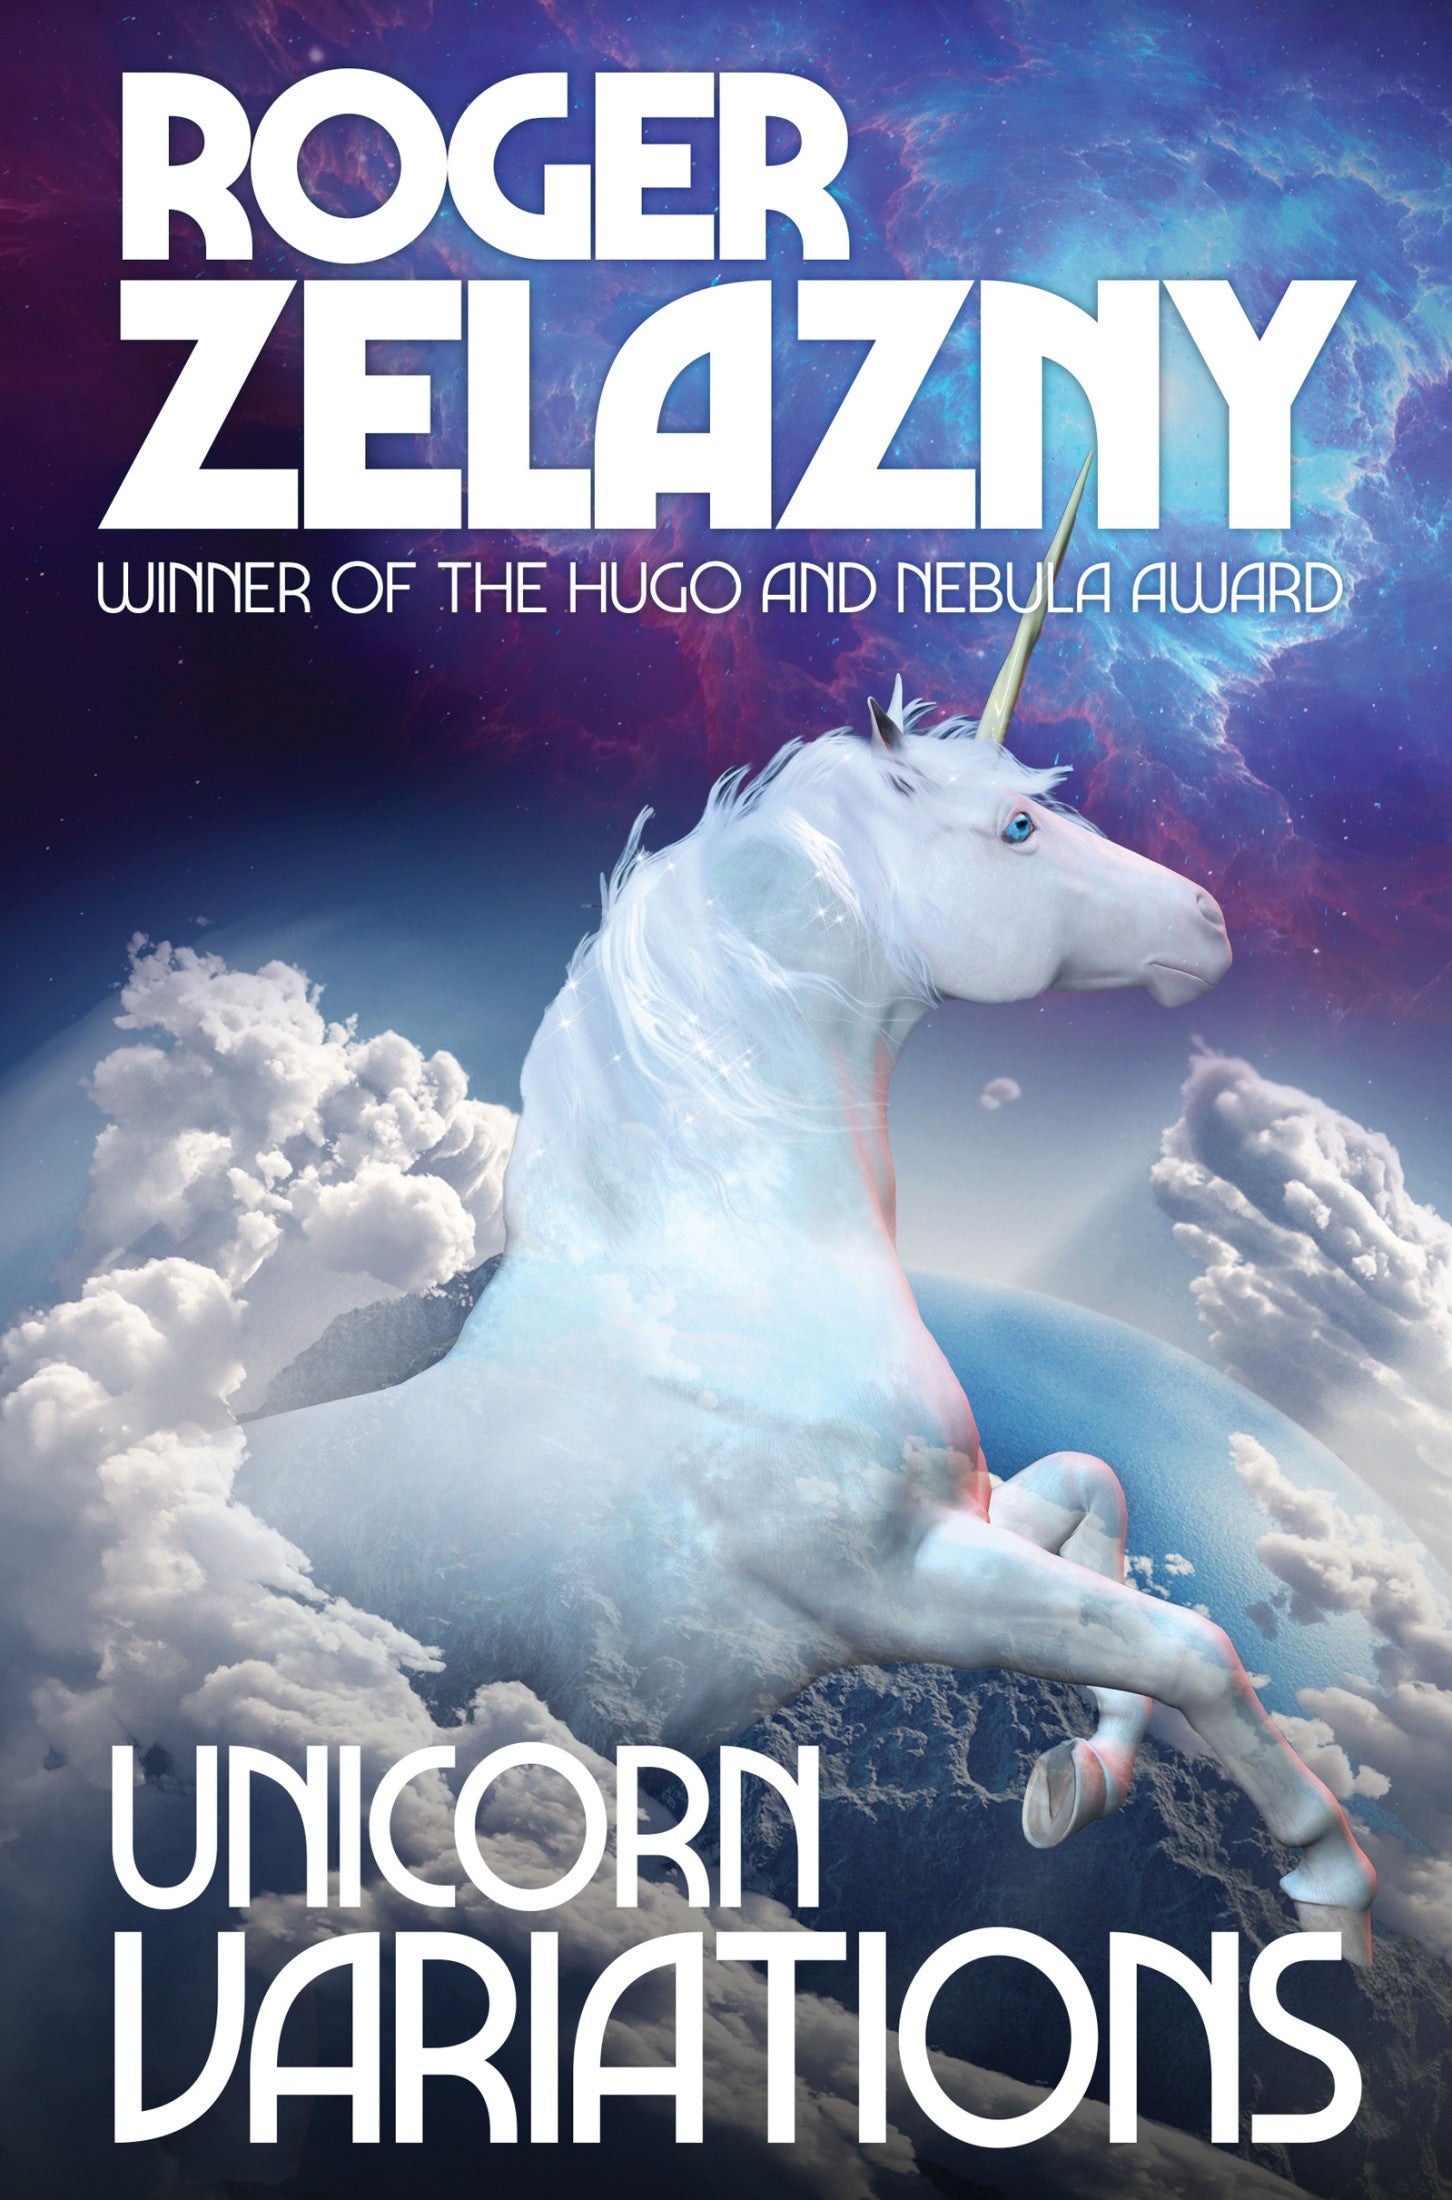 Cover art for Unicorn Variations.